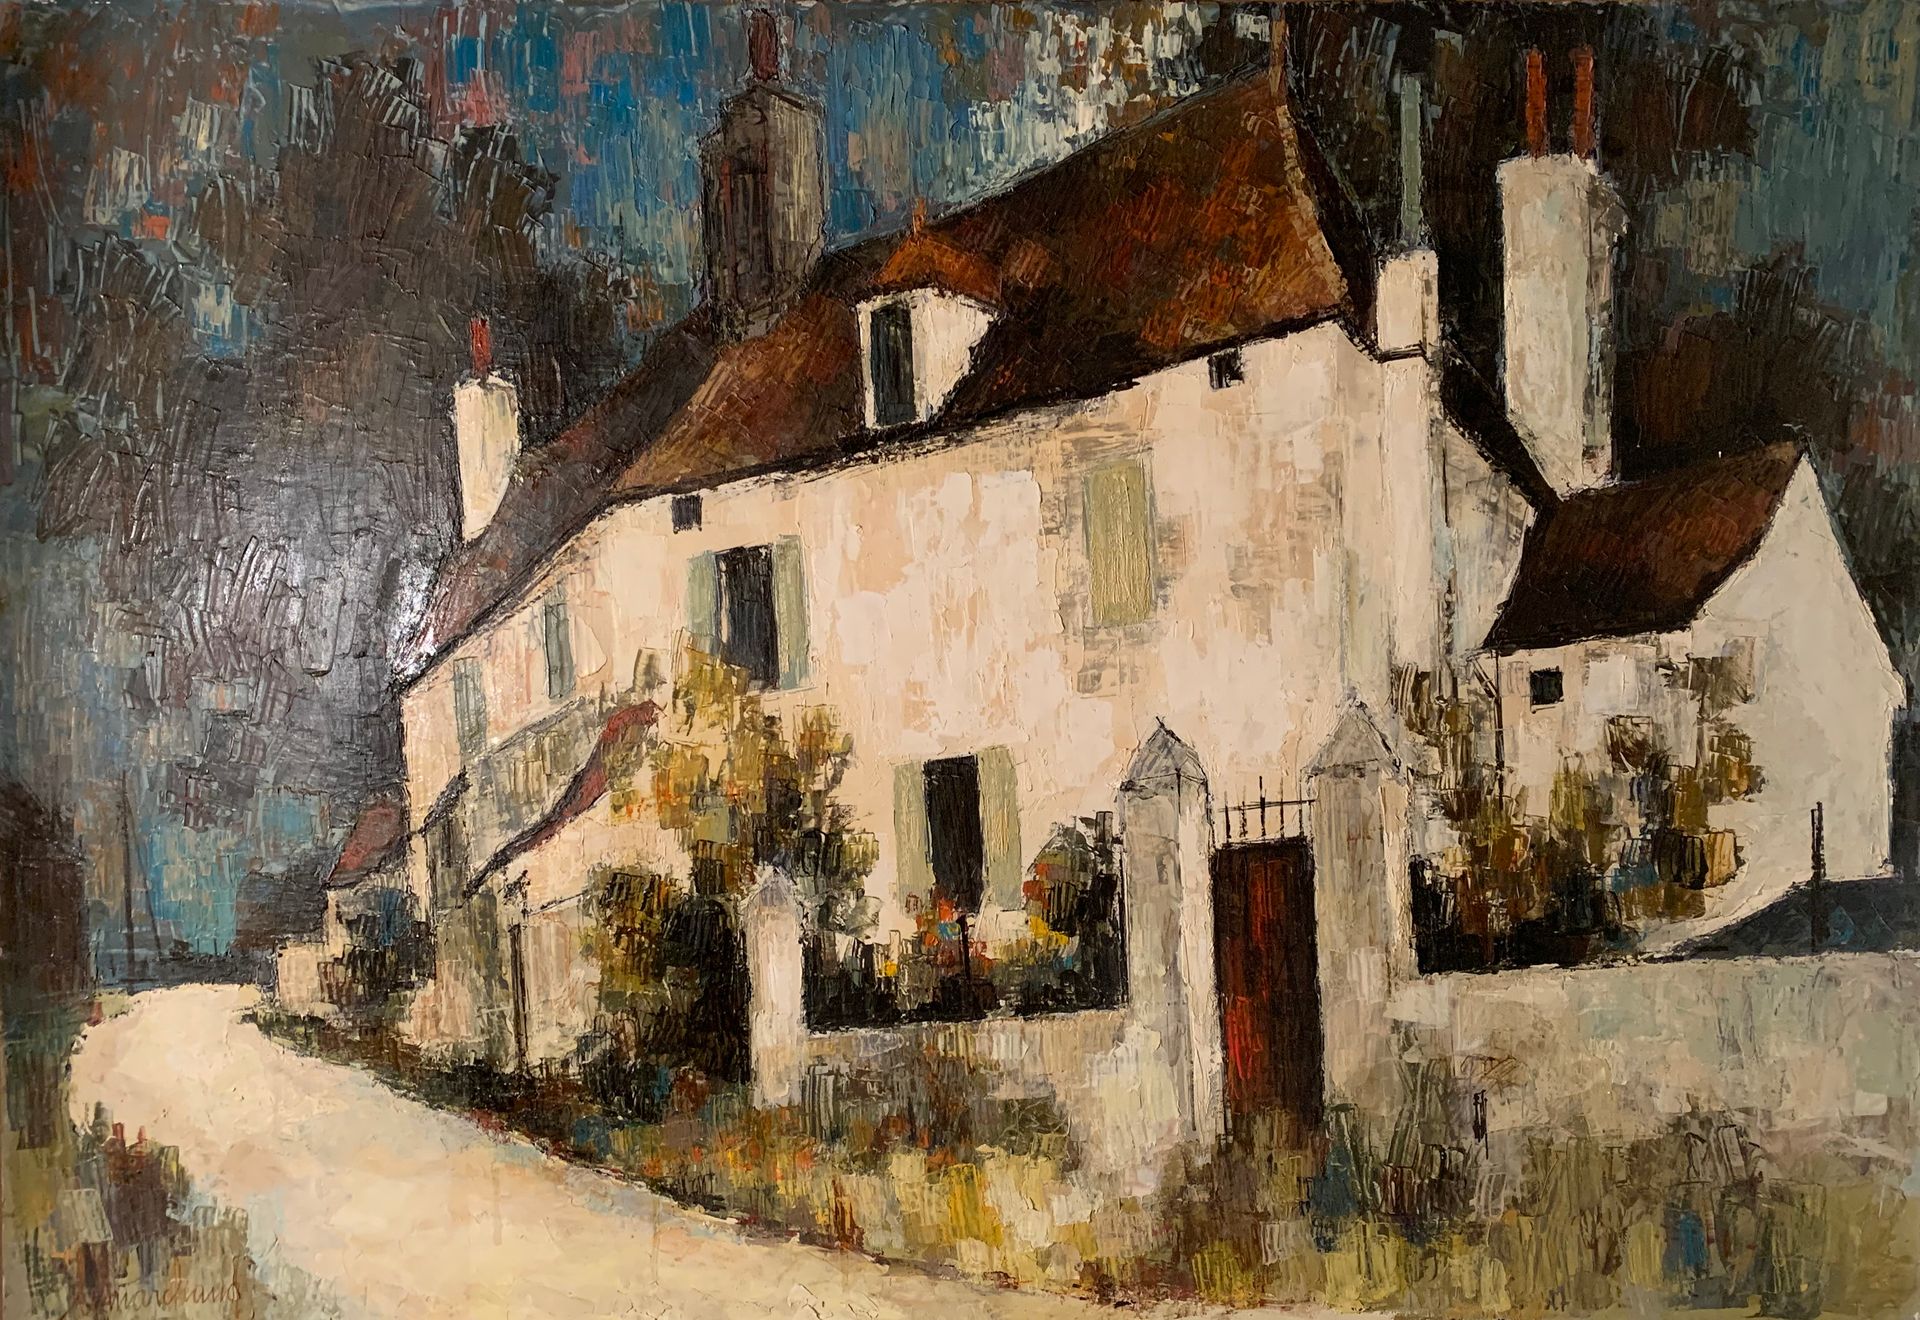 Null 皮埃尔-莱马赫德 (1906-1970)

小巷和白房子

布面油画，左下角有签名

81 x 116厘米。